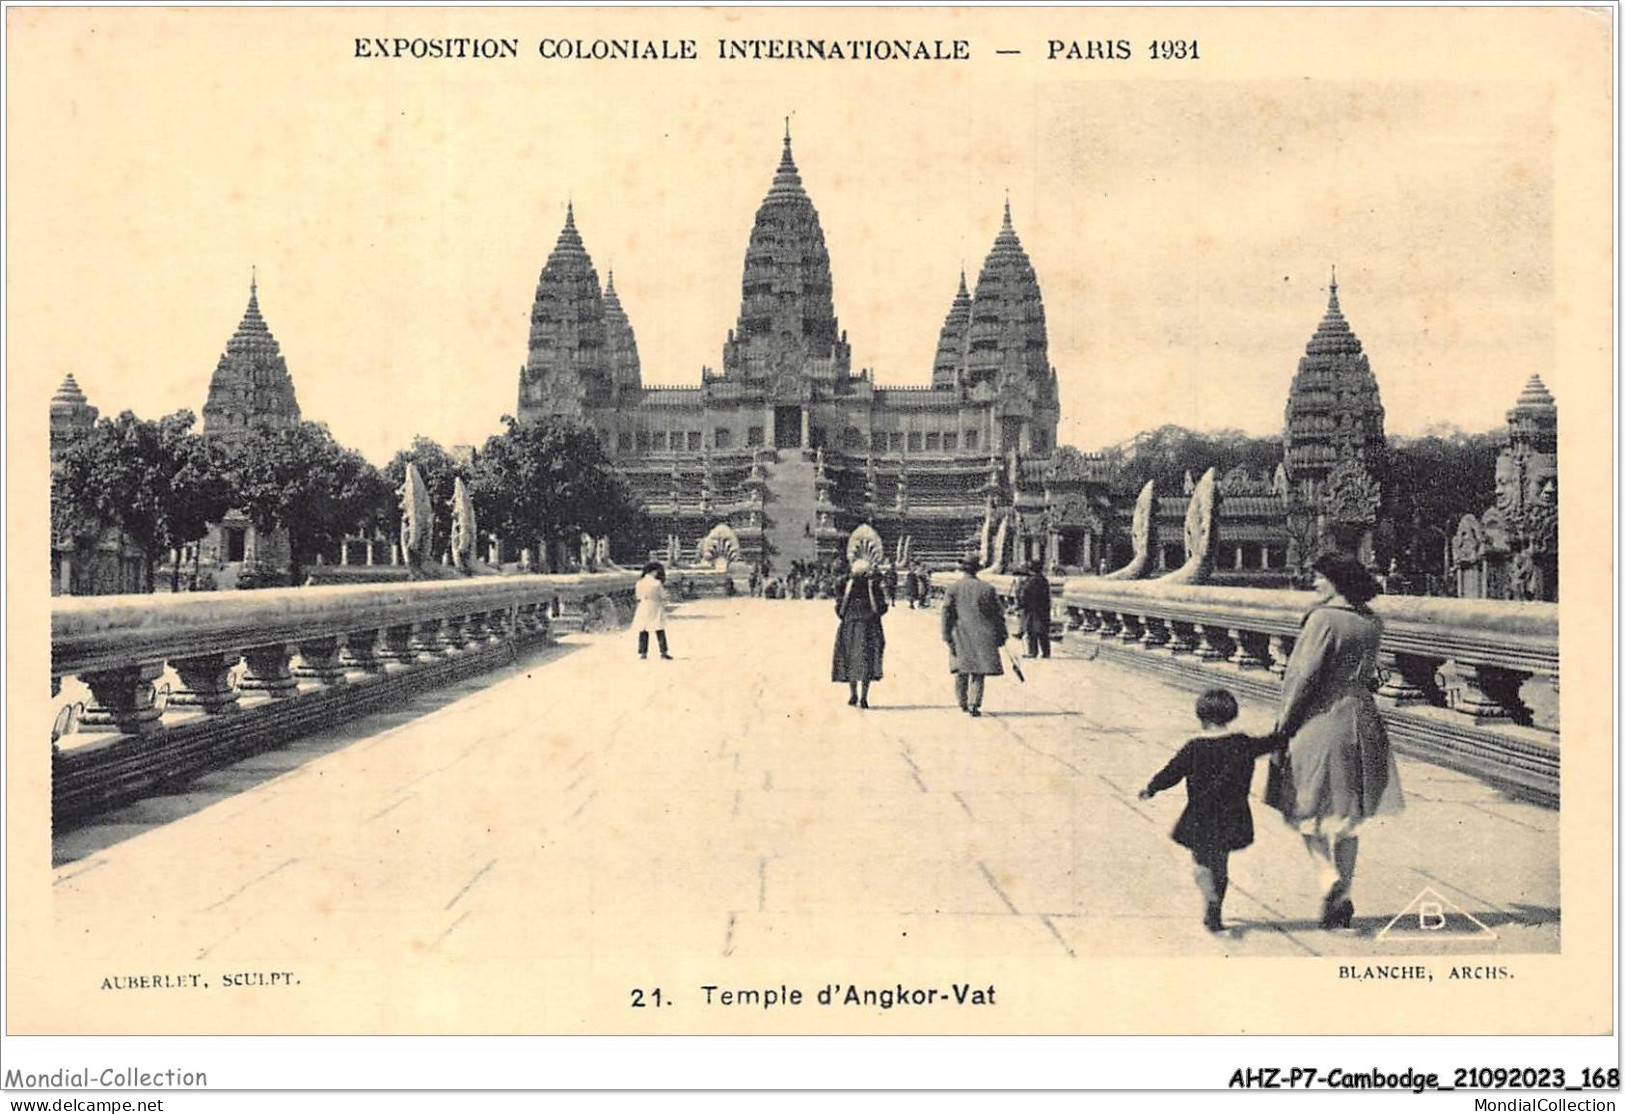 AHZP7-CAMBODGE-0680 - EXPOSITION COLONIALE INTERNATIONALE - PARIS 1931 - TEMPLE D'ANGKOR-VAT - Cambodia